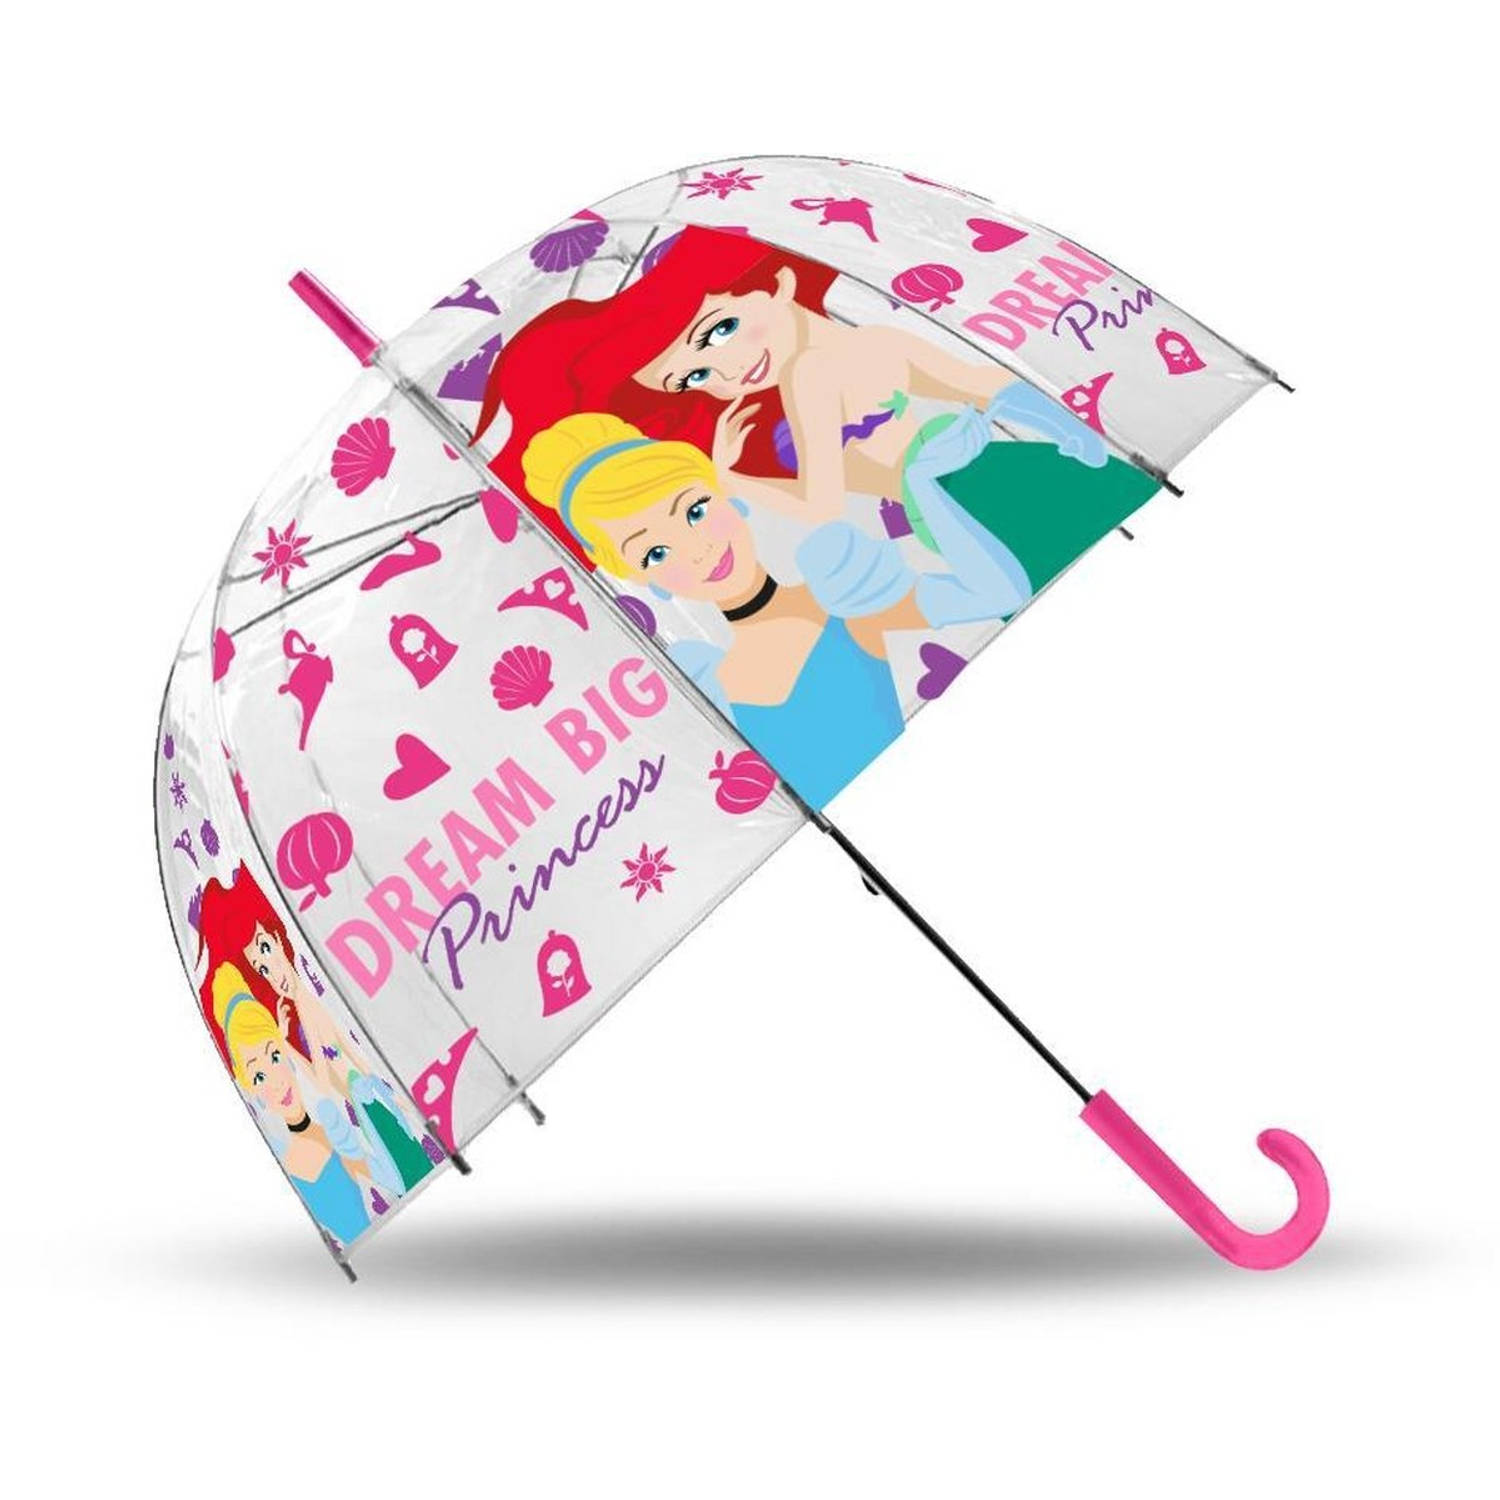 Kinderparaplu&apos;s - Princess Kinderparaplu - paraplus - Paraplu - Paraplu kopen - Paraplu kind - Paraplumerk -